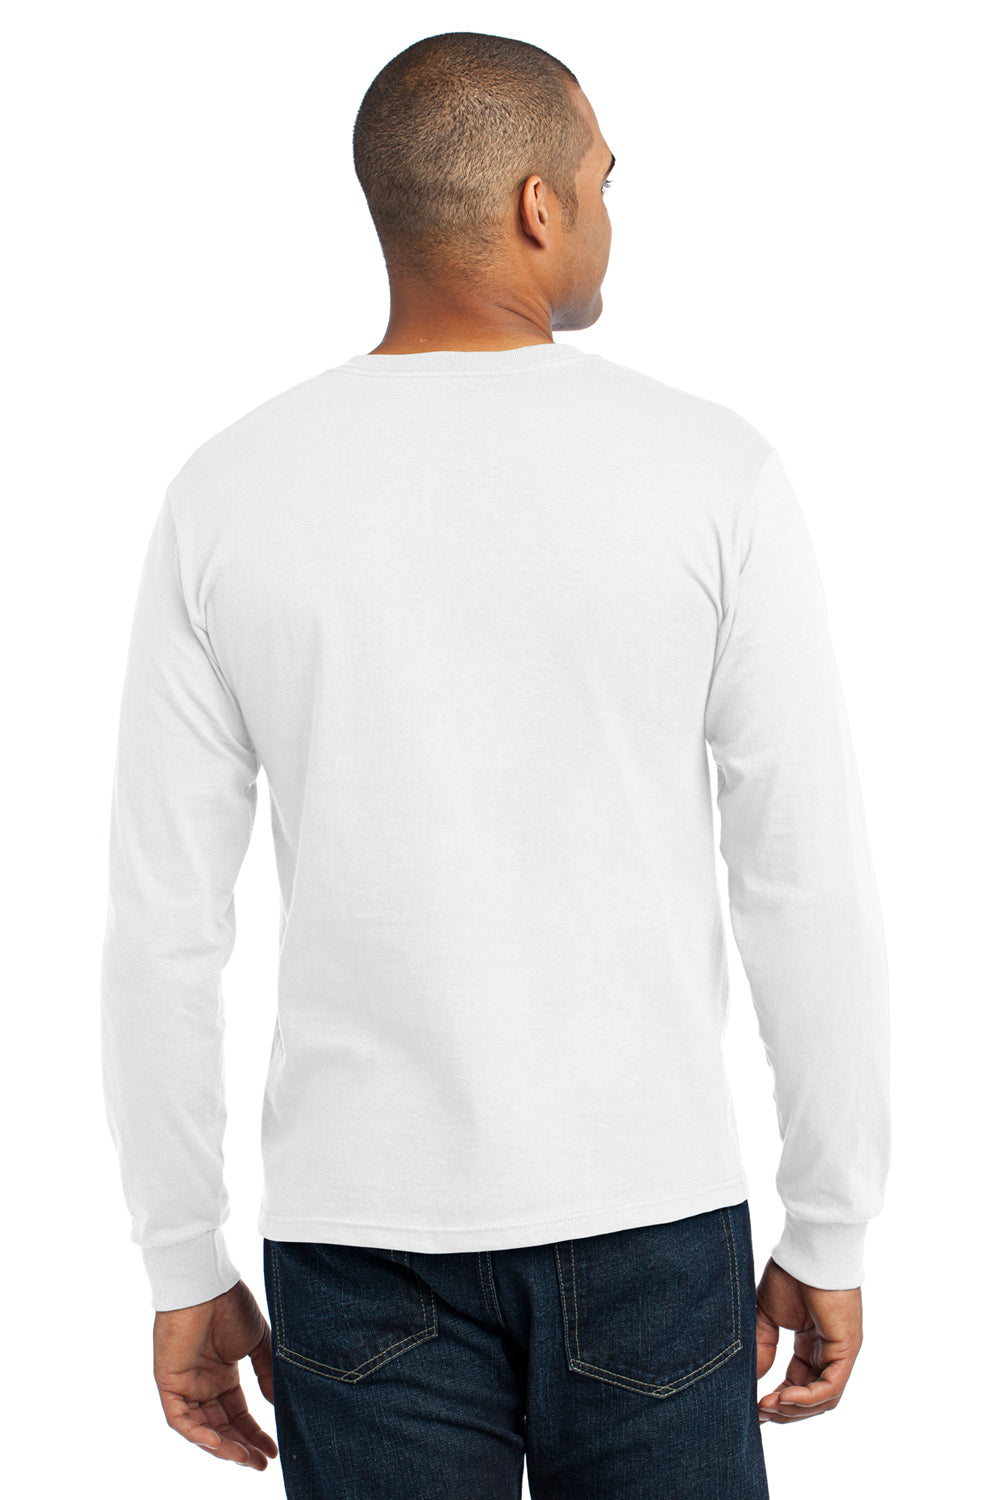 Port & Company USA100LS Mens USA Made Long Sleeve Crewneck T-Shirt White Back